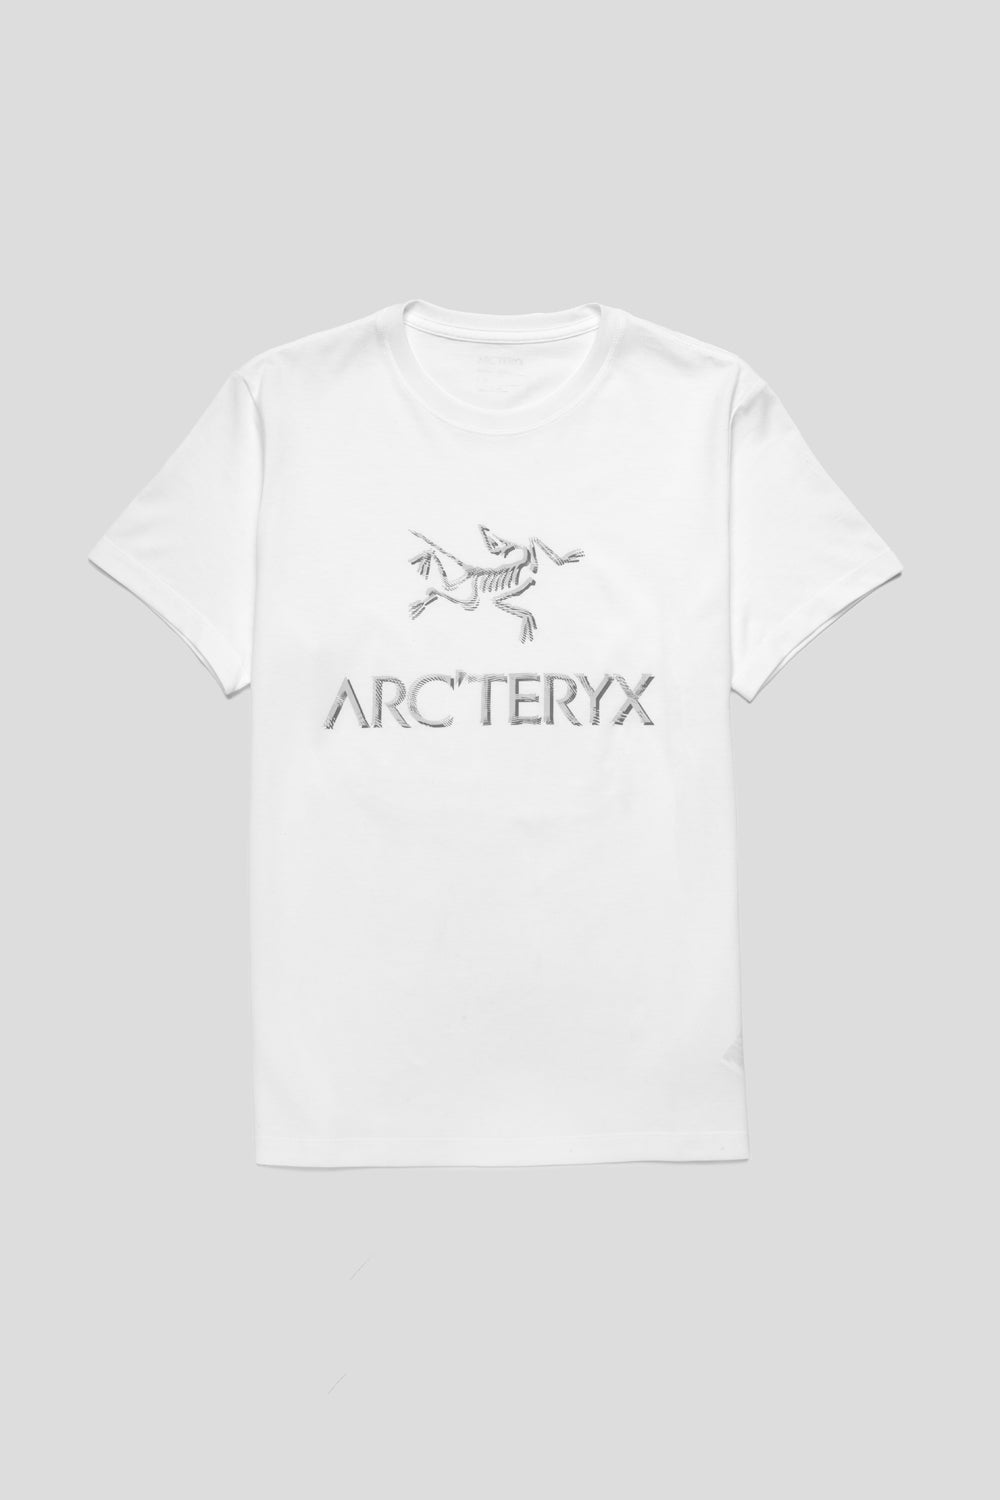 Arc'Word T-Shirt 'White Light'